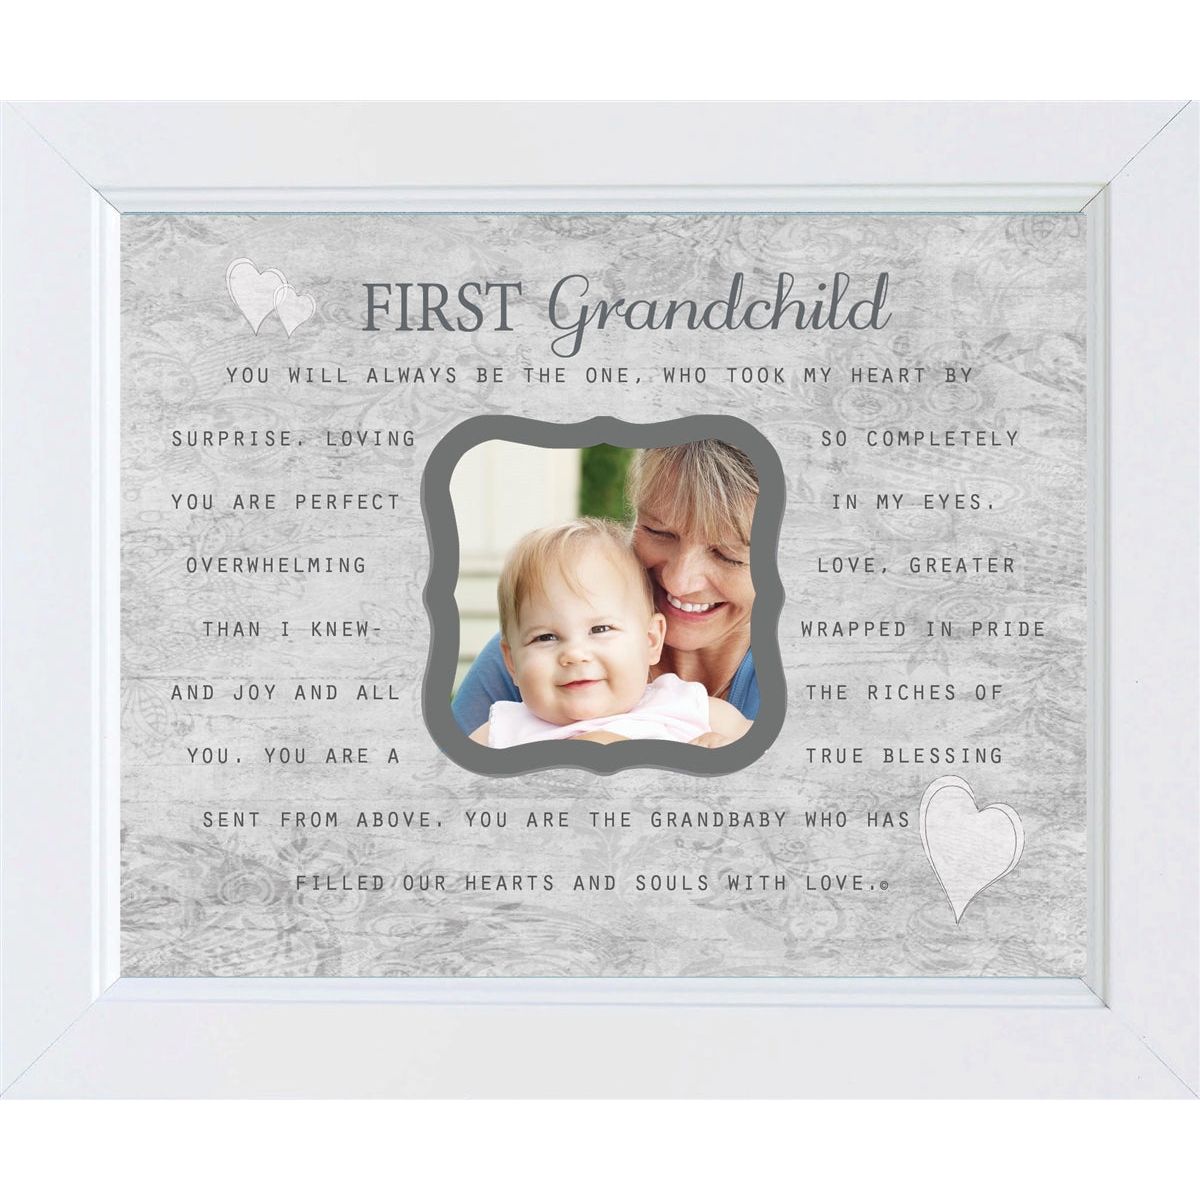 First Grandchild: 8x10 Frame for New Grandparents